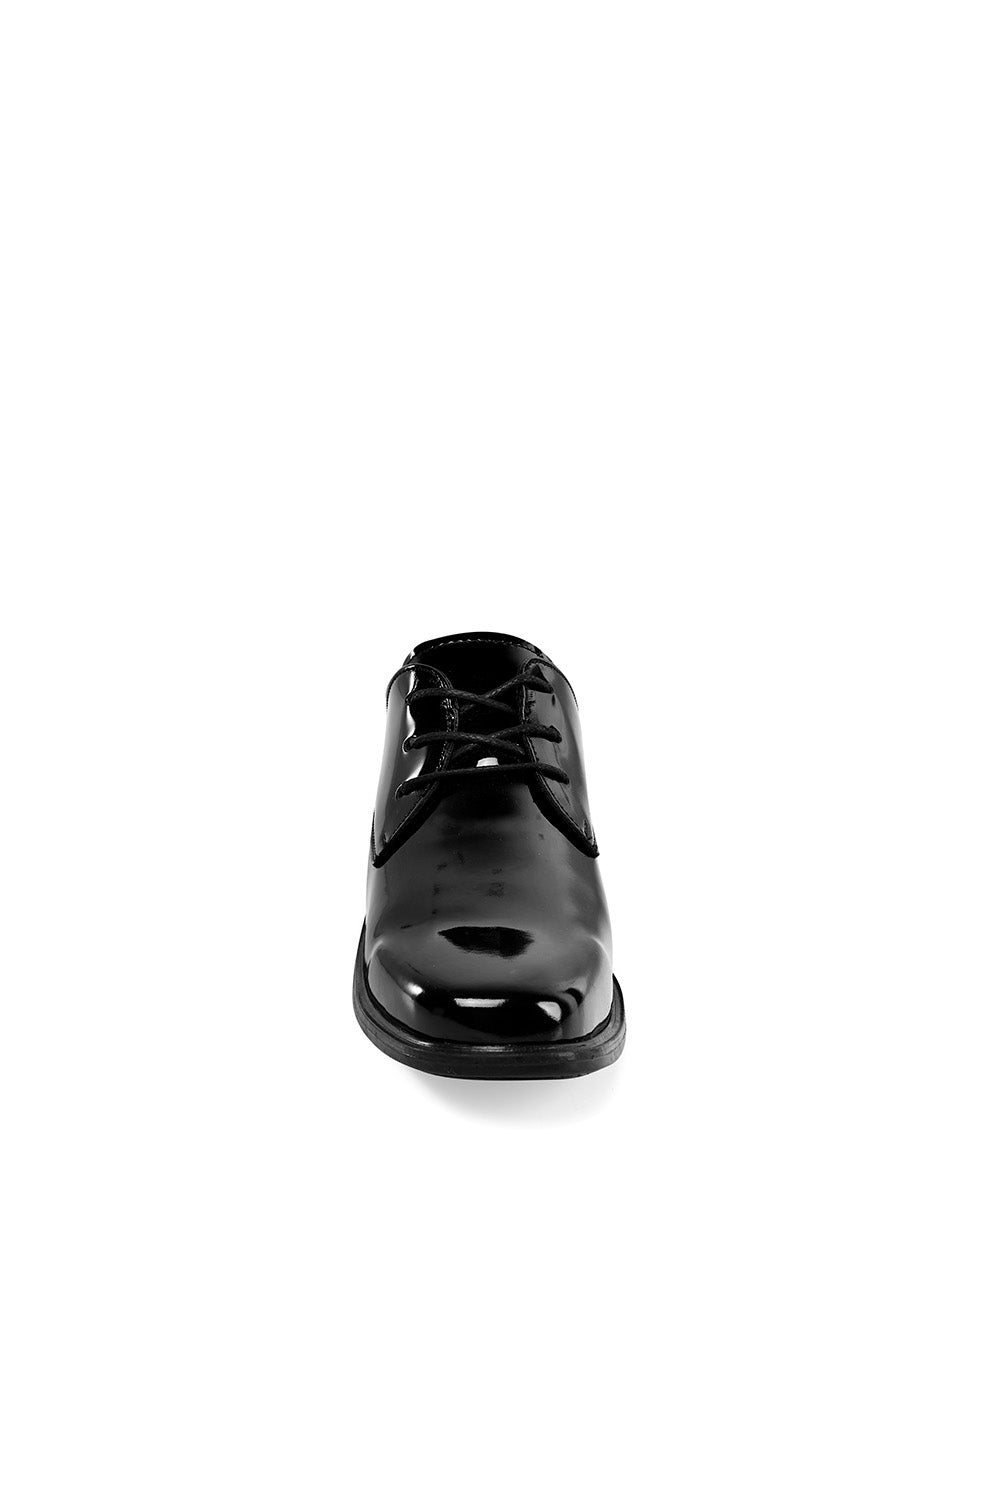 Zapato Formal para Hombre Tipo Charol Negro Mundo Terra